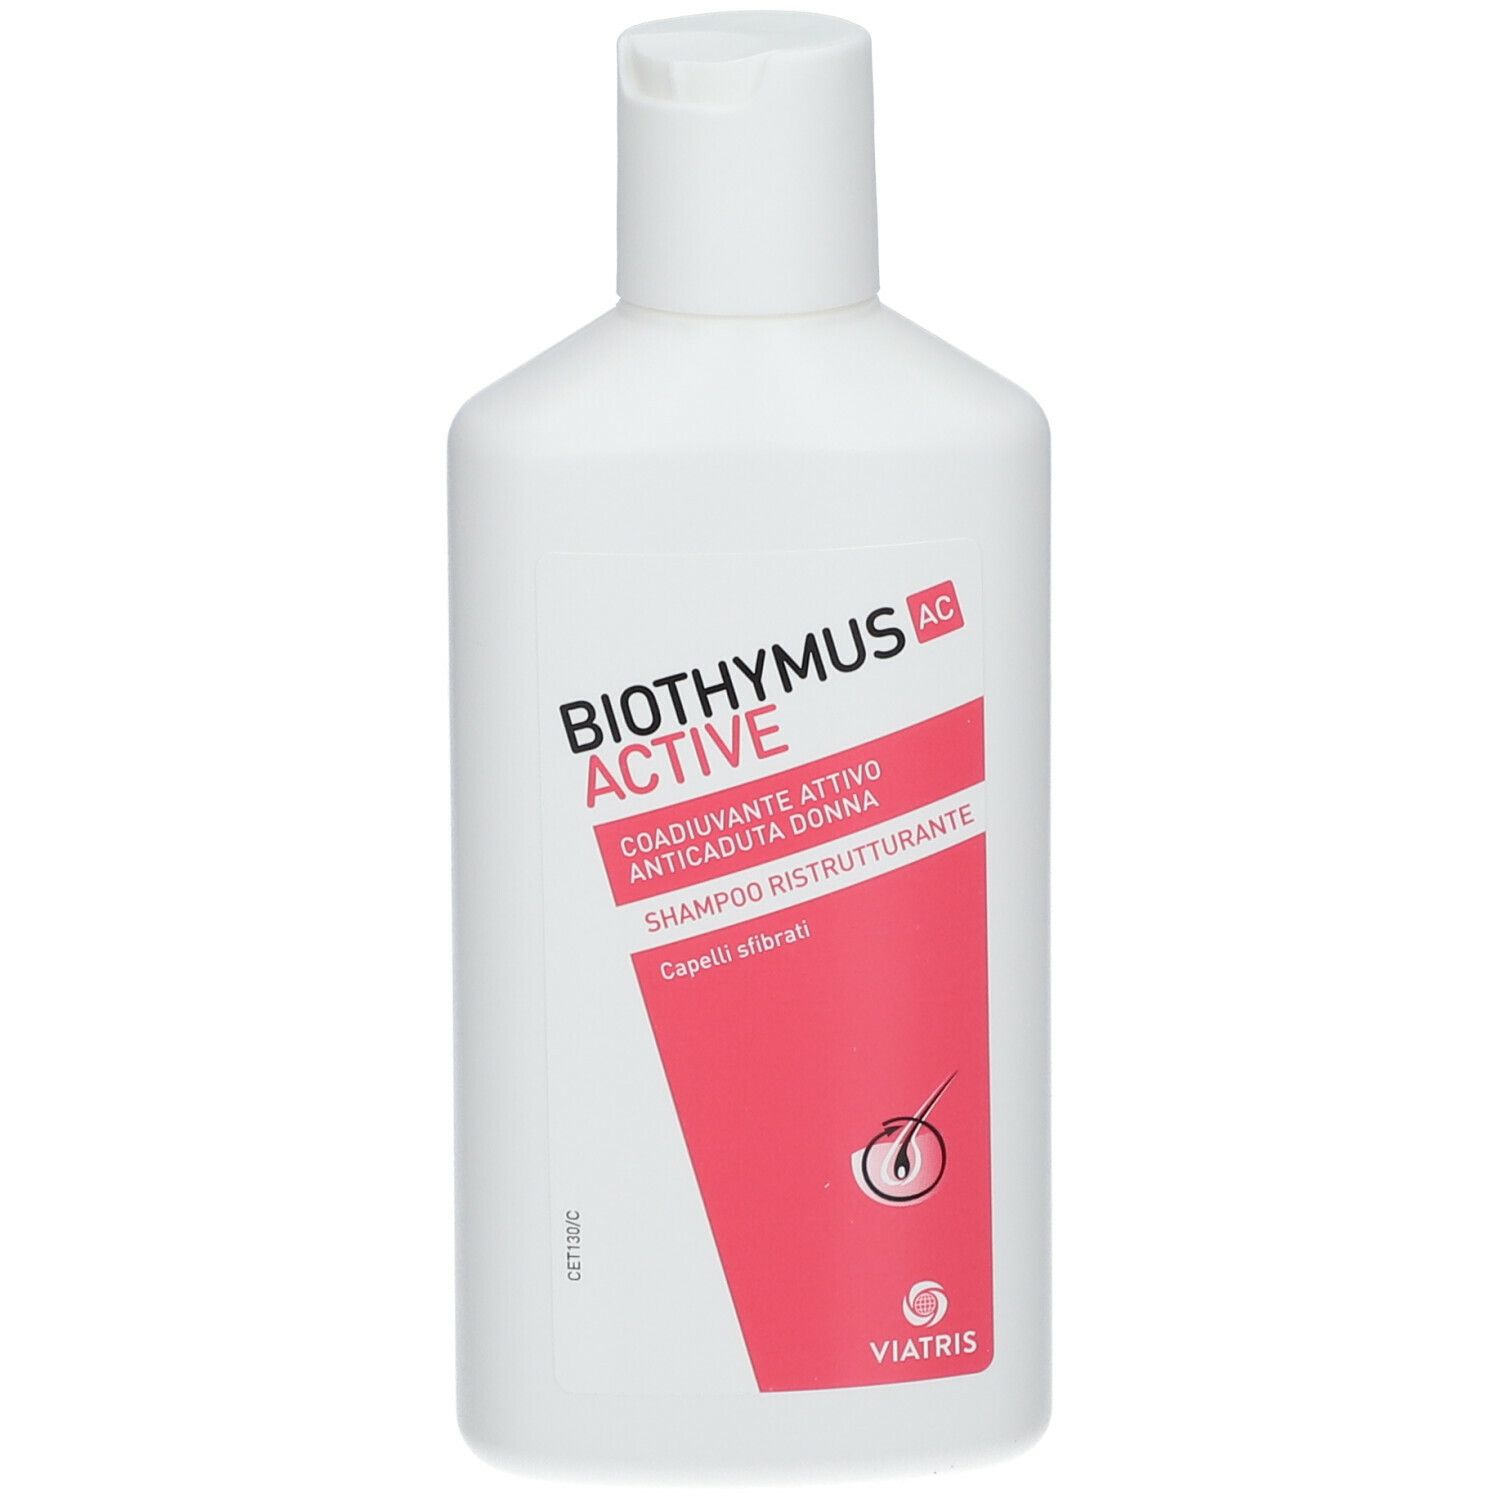 Image of Biothymus AC Active Shampoo Ristrutturante